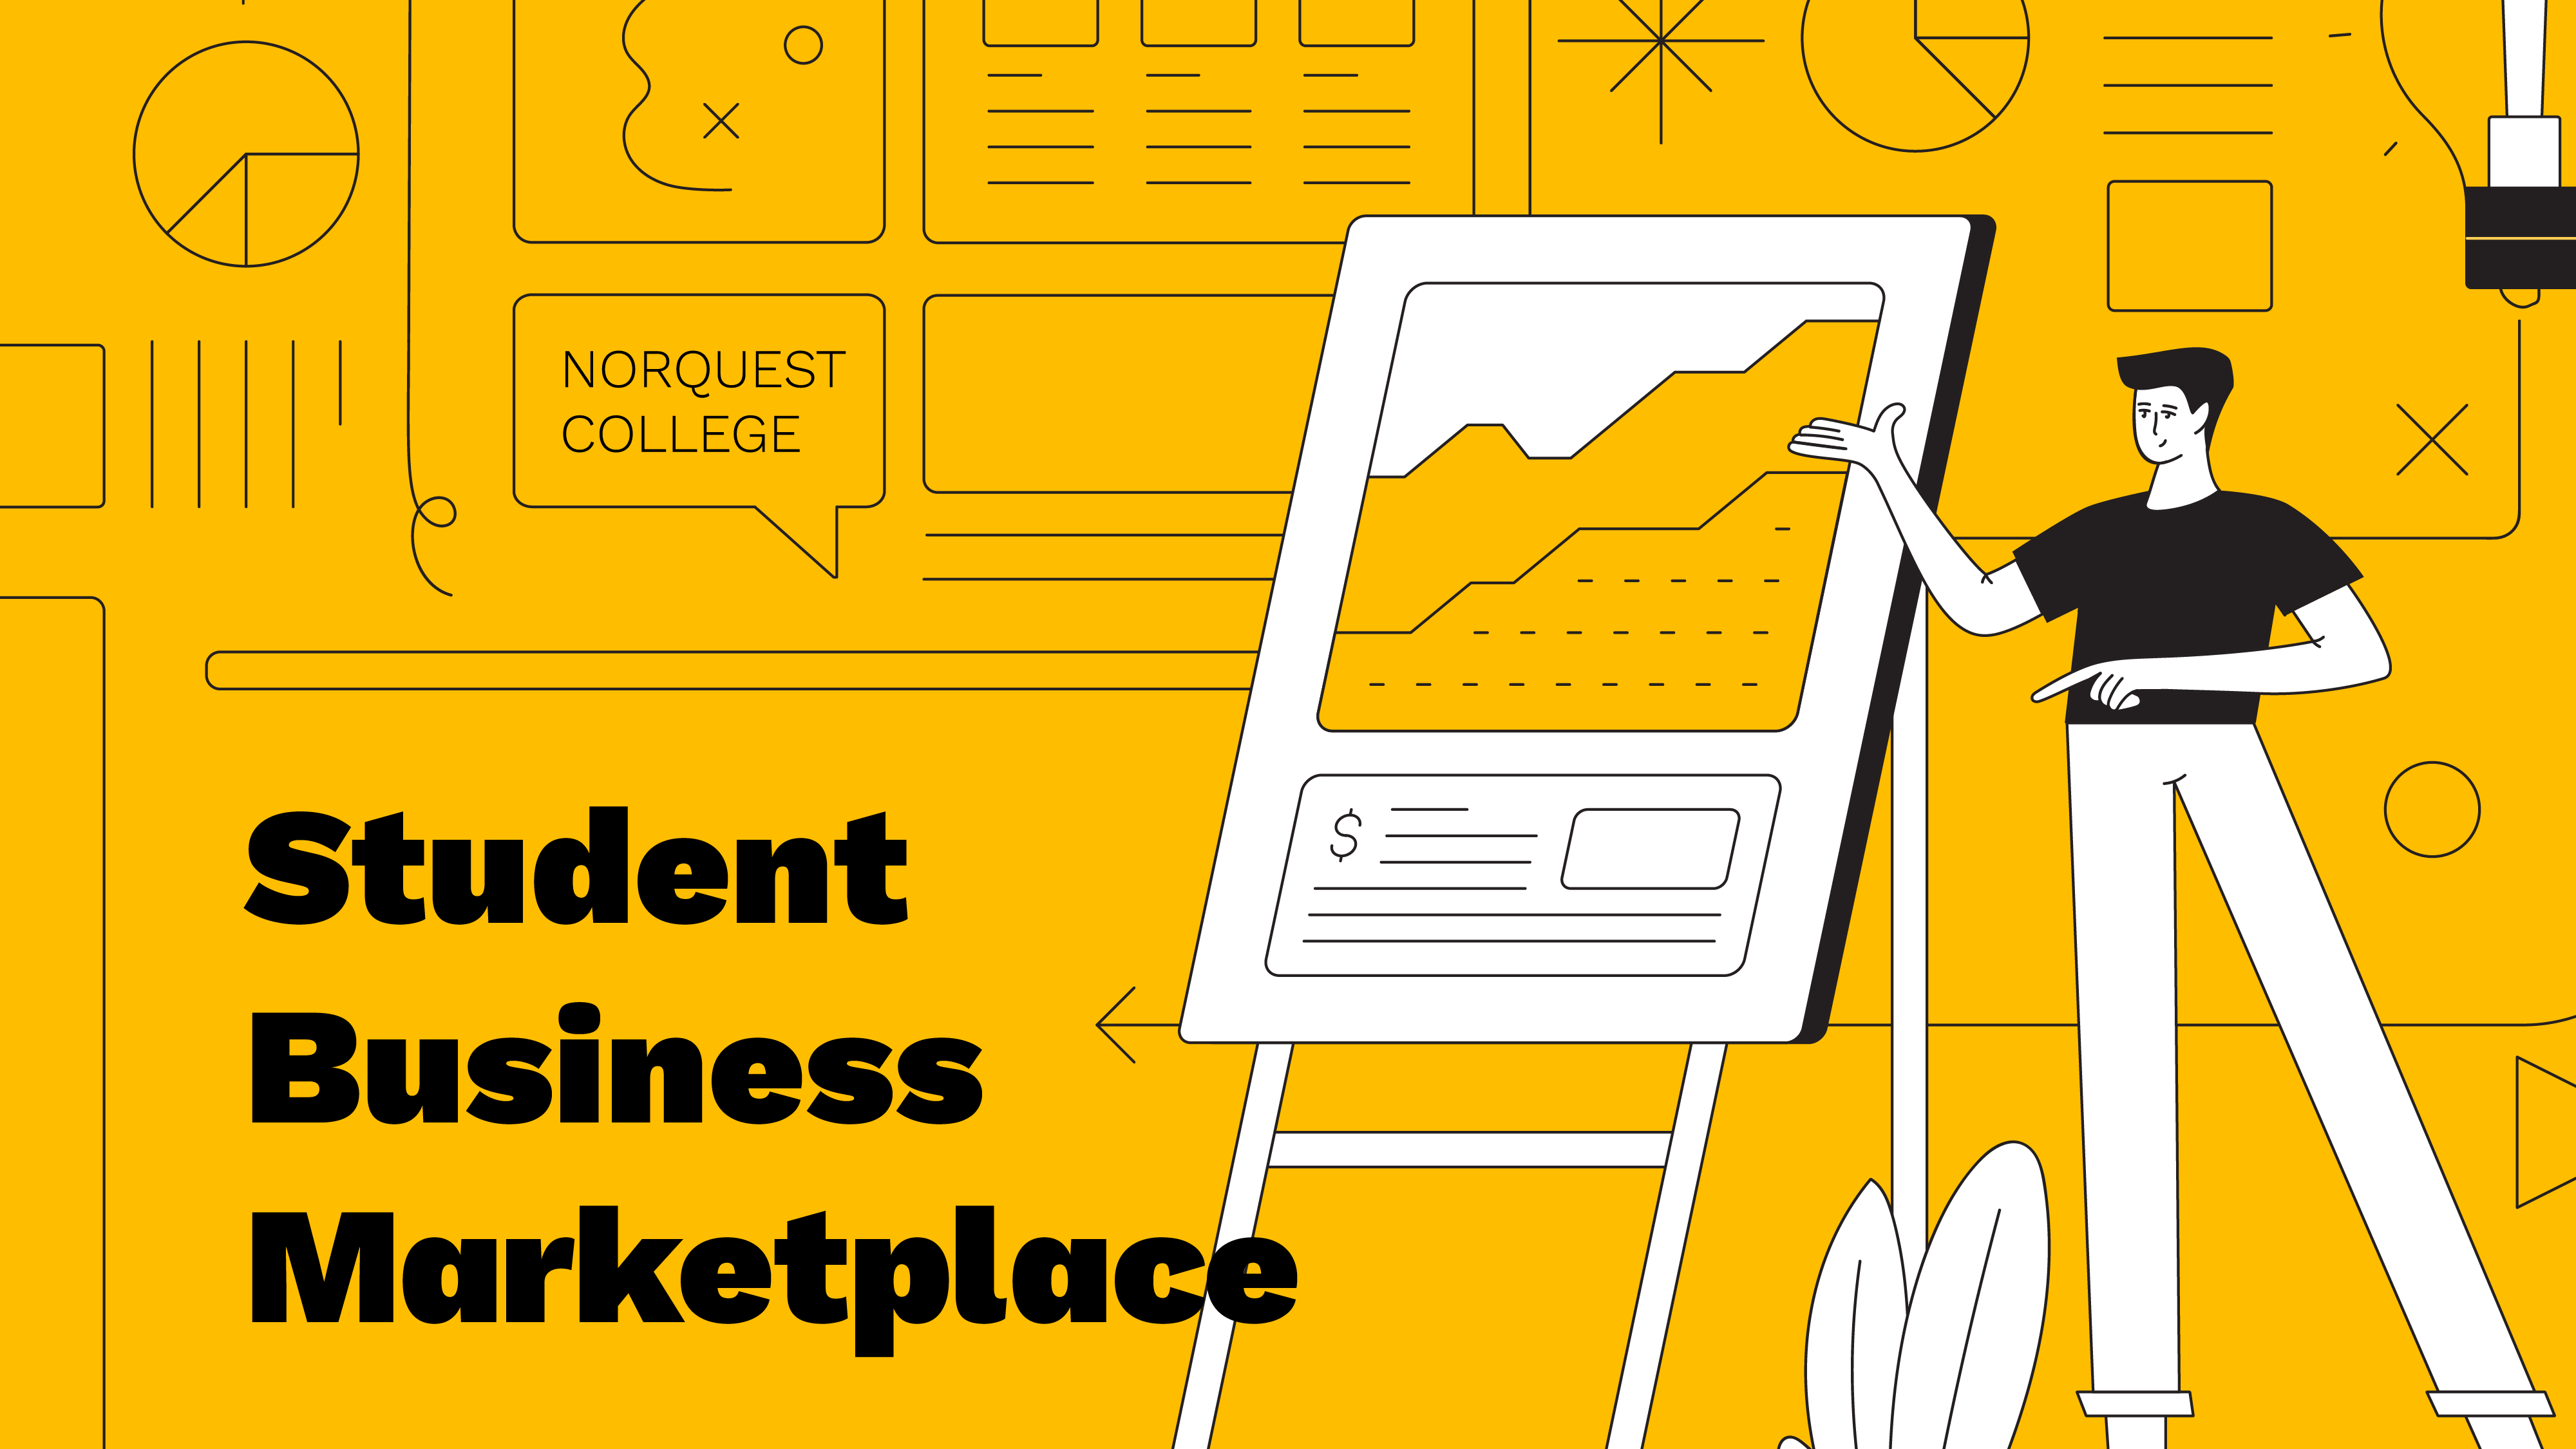 Student Business Marketplace Image